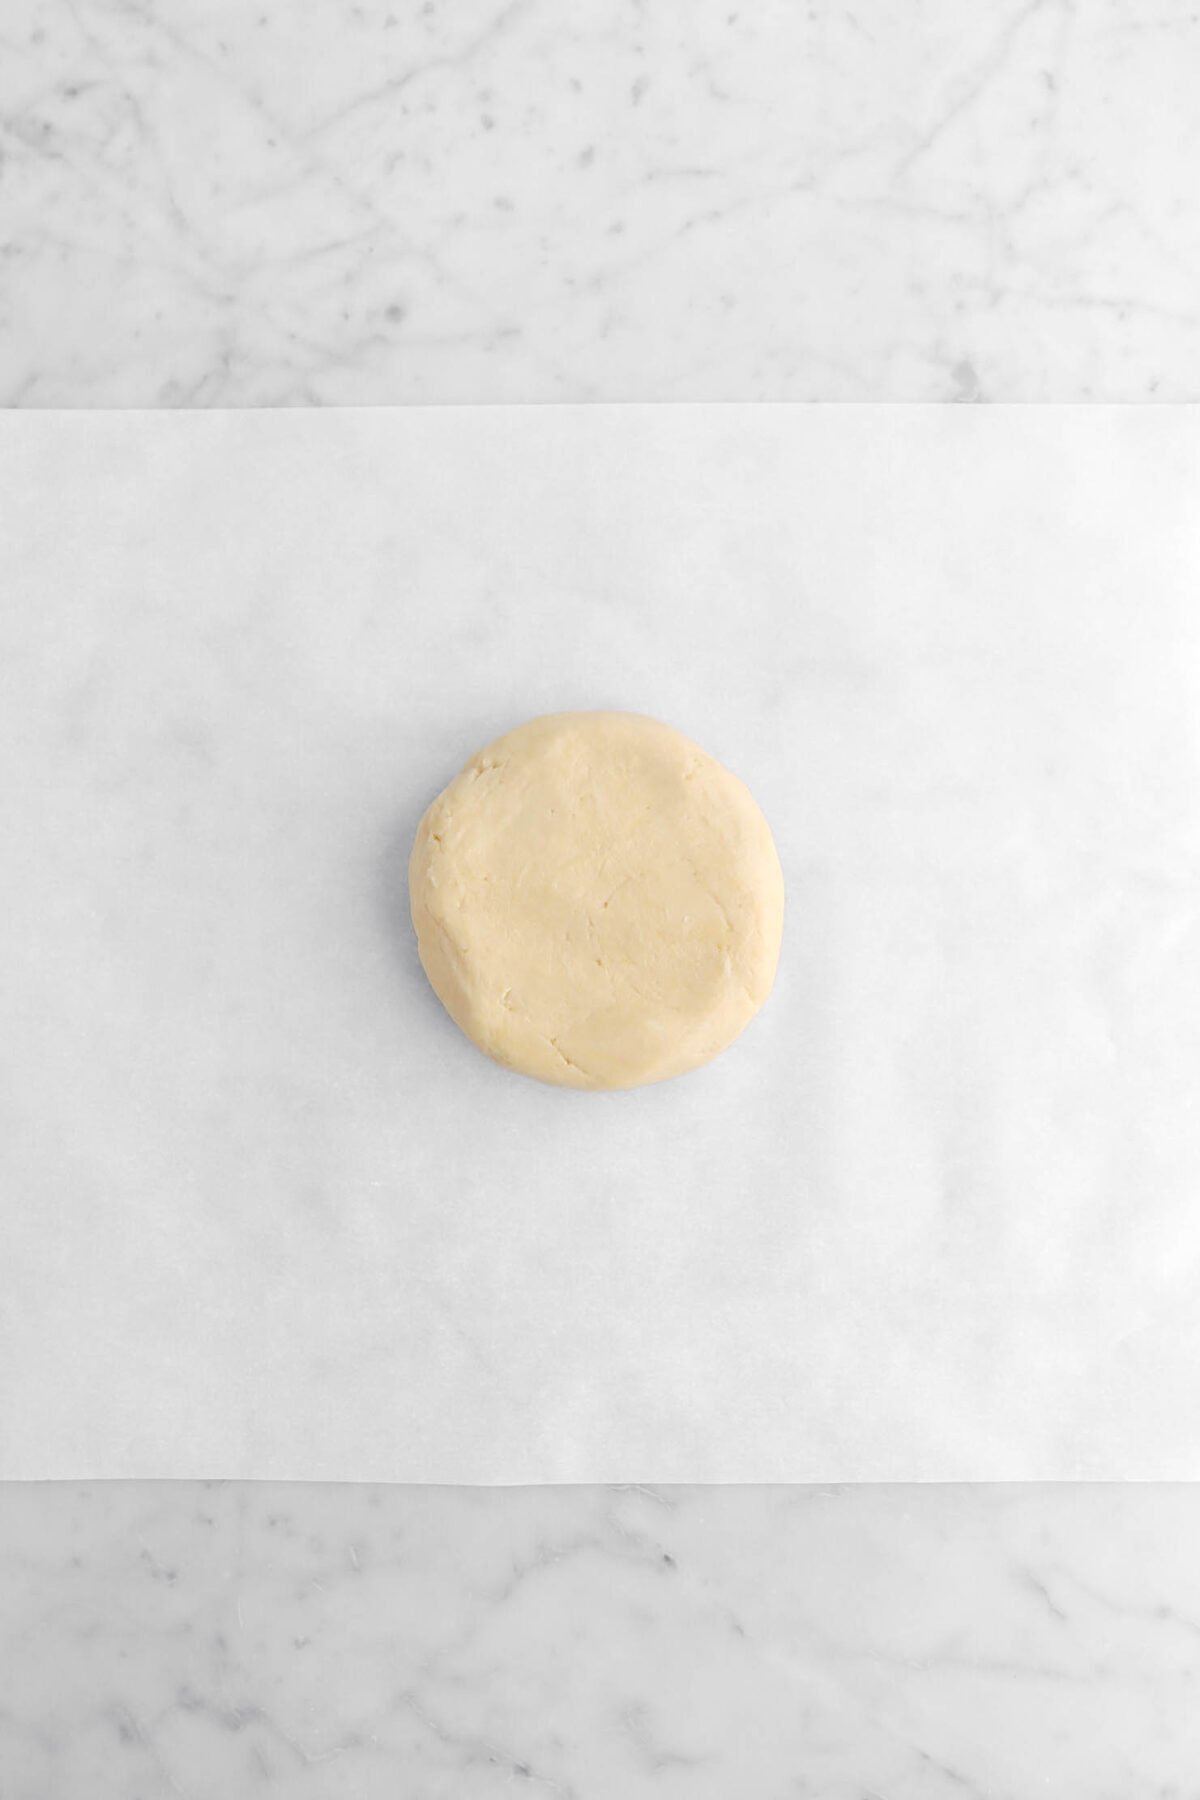 dough in a disc shape on parchment paper.